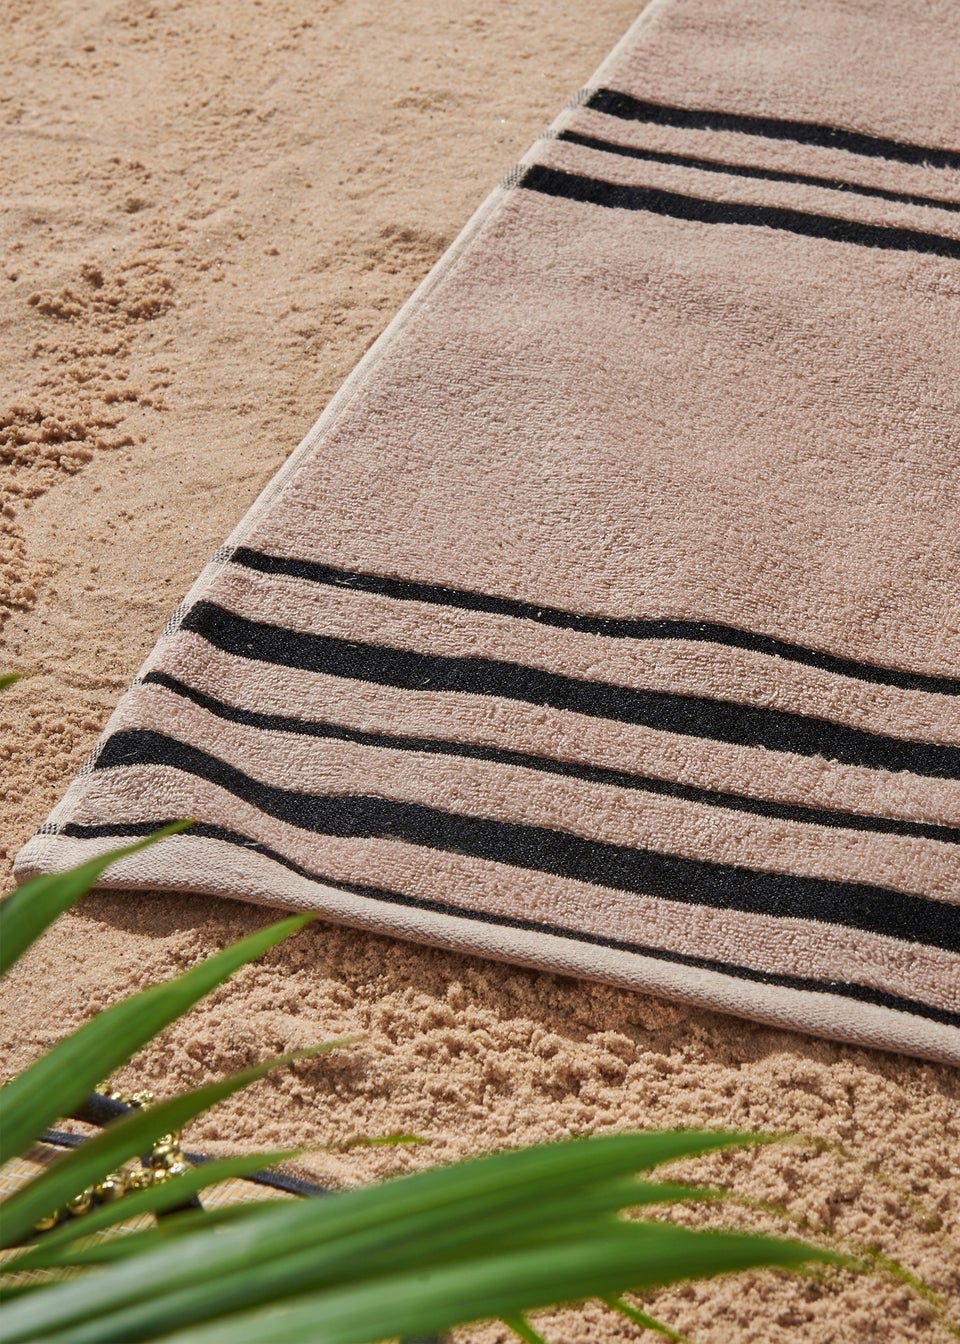 Catherine Lansfield Banded Stripe Cotton Beach Towel Pair